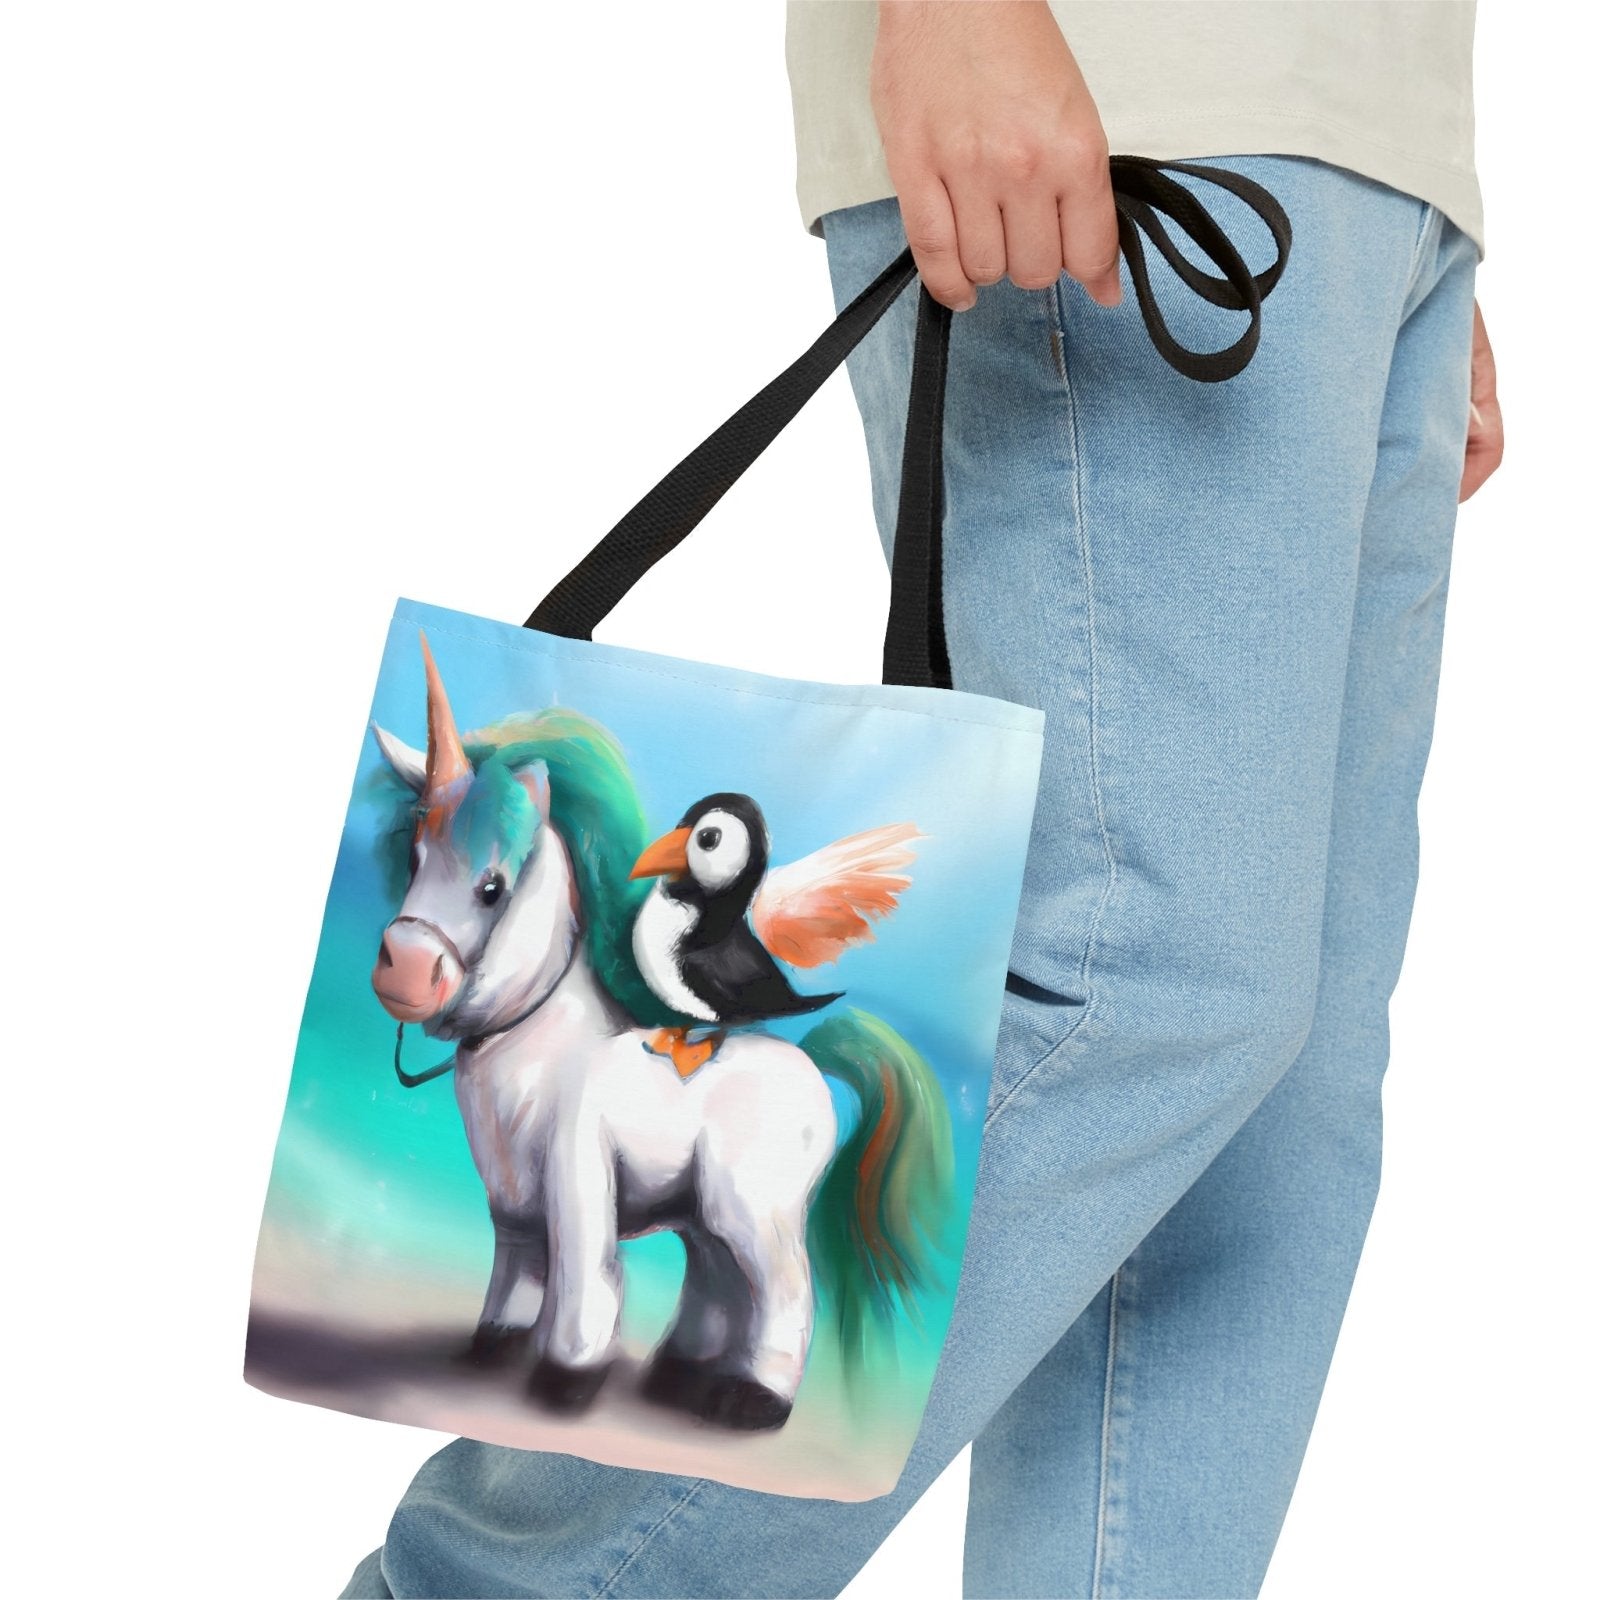 Puffincorn Tote, unicorn bag, puffin accessories - Subtle Blue M